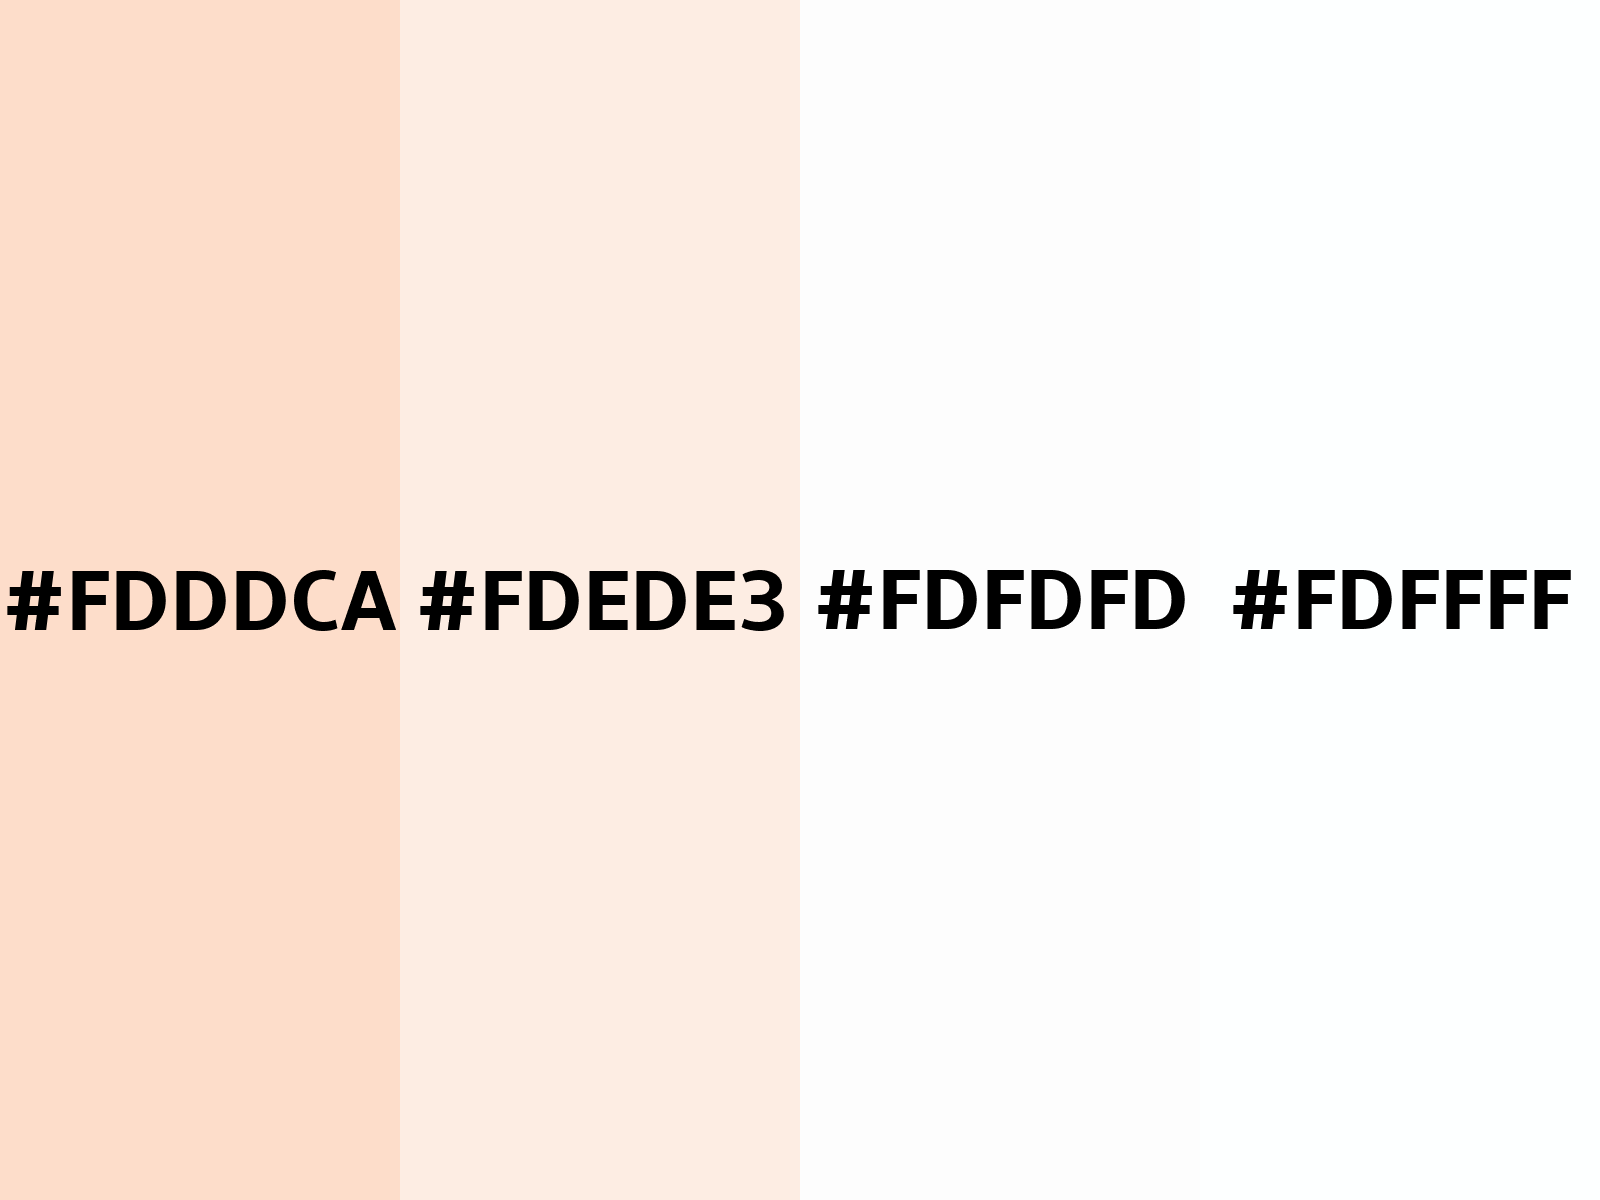 fdddca Hex Color Code, RGB and Paints